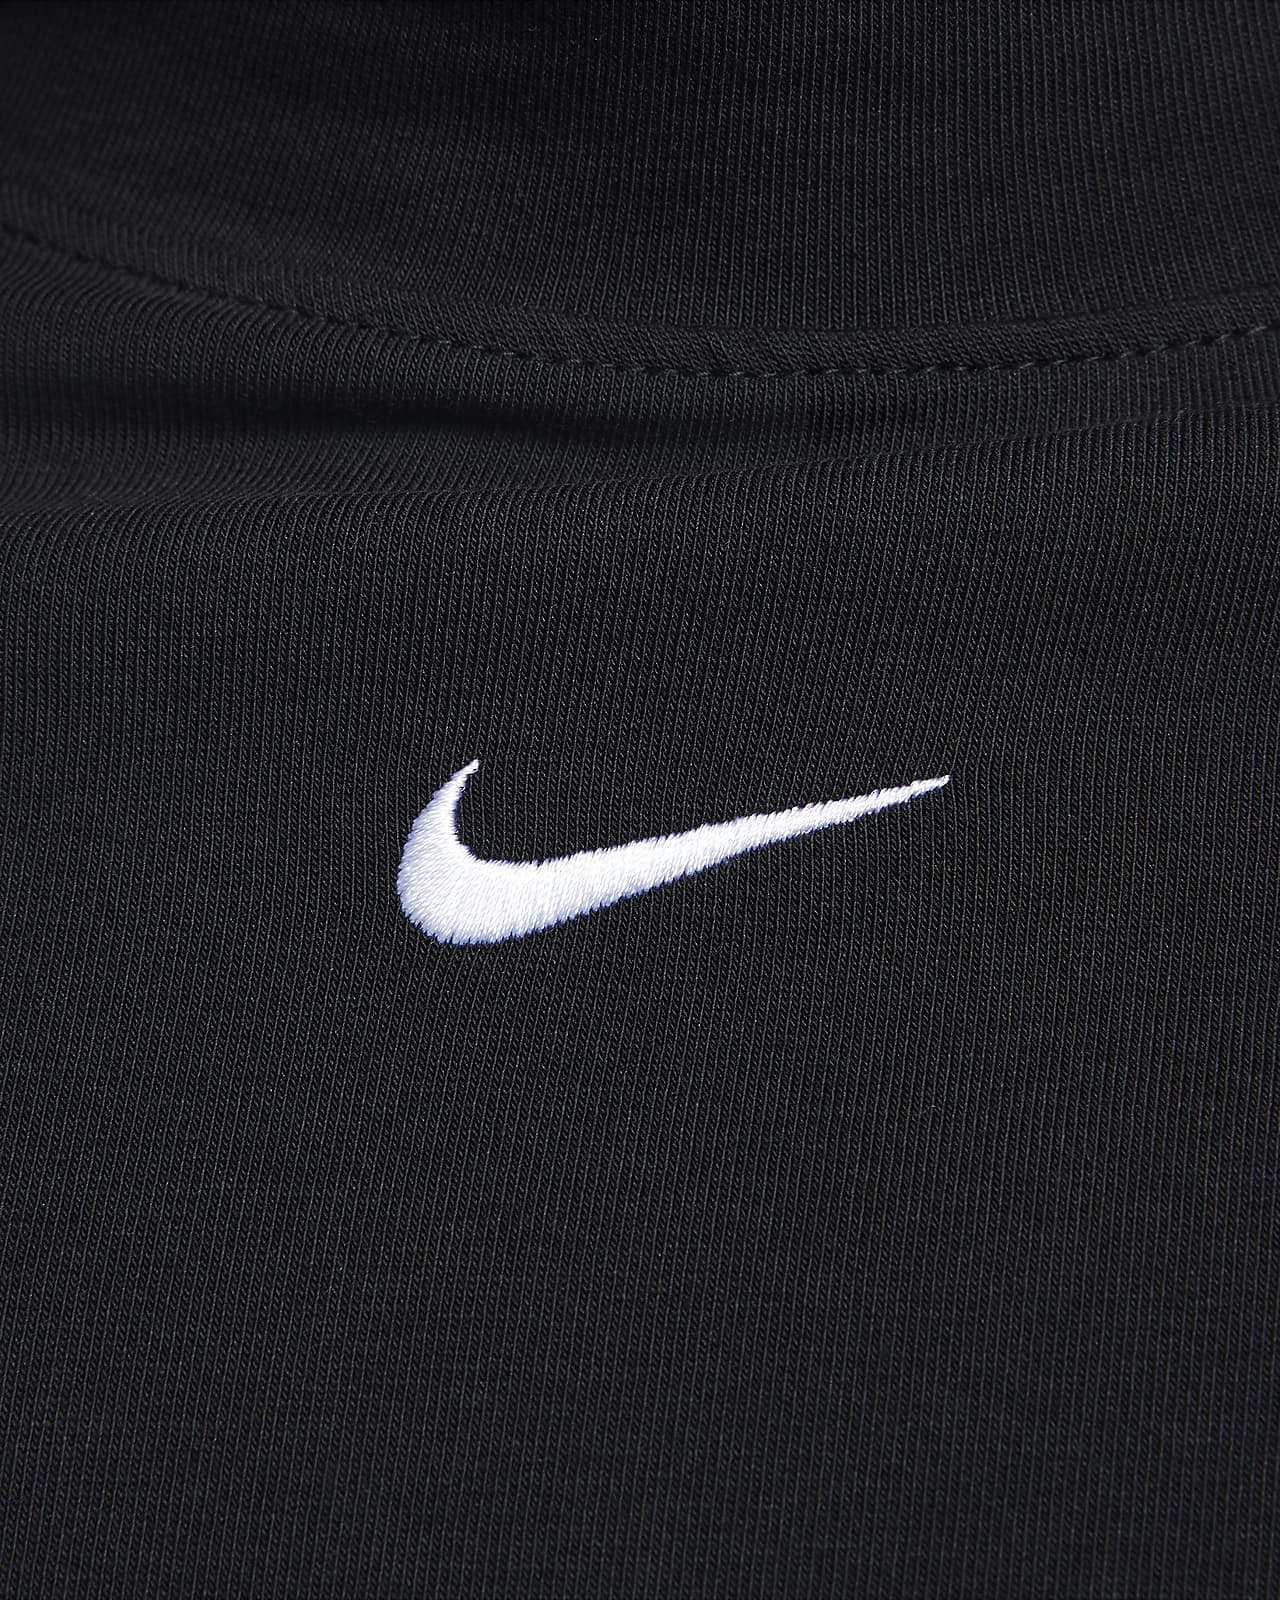 Nike Sportswear Collection Essentials Women\'s Top. Long-Sleeve Mock